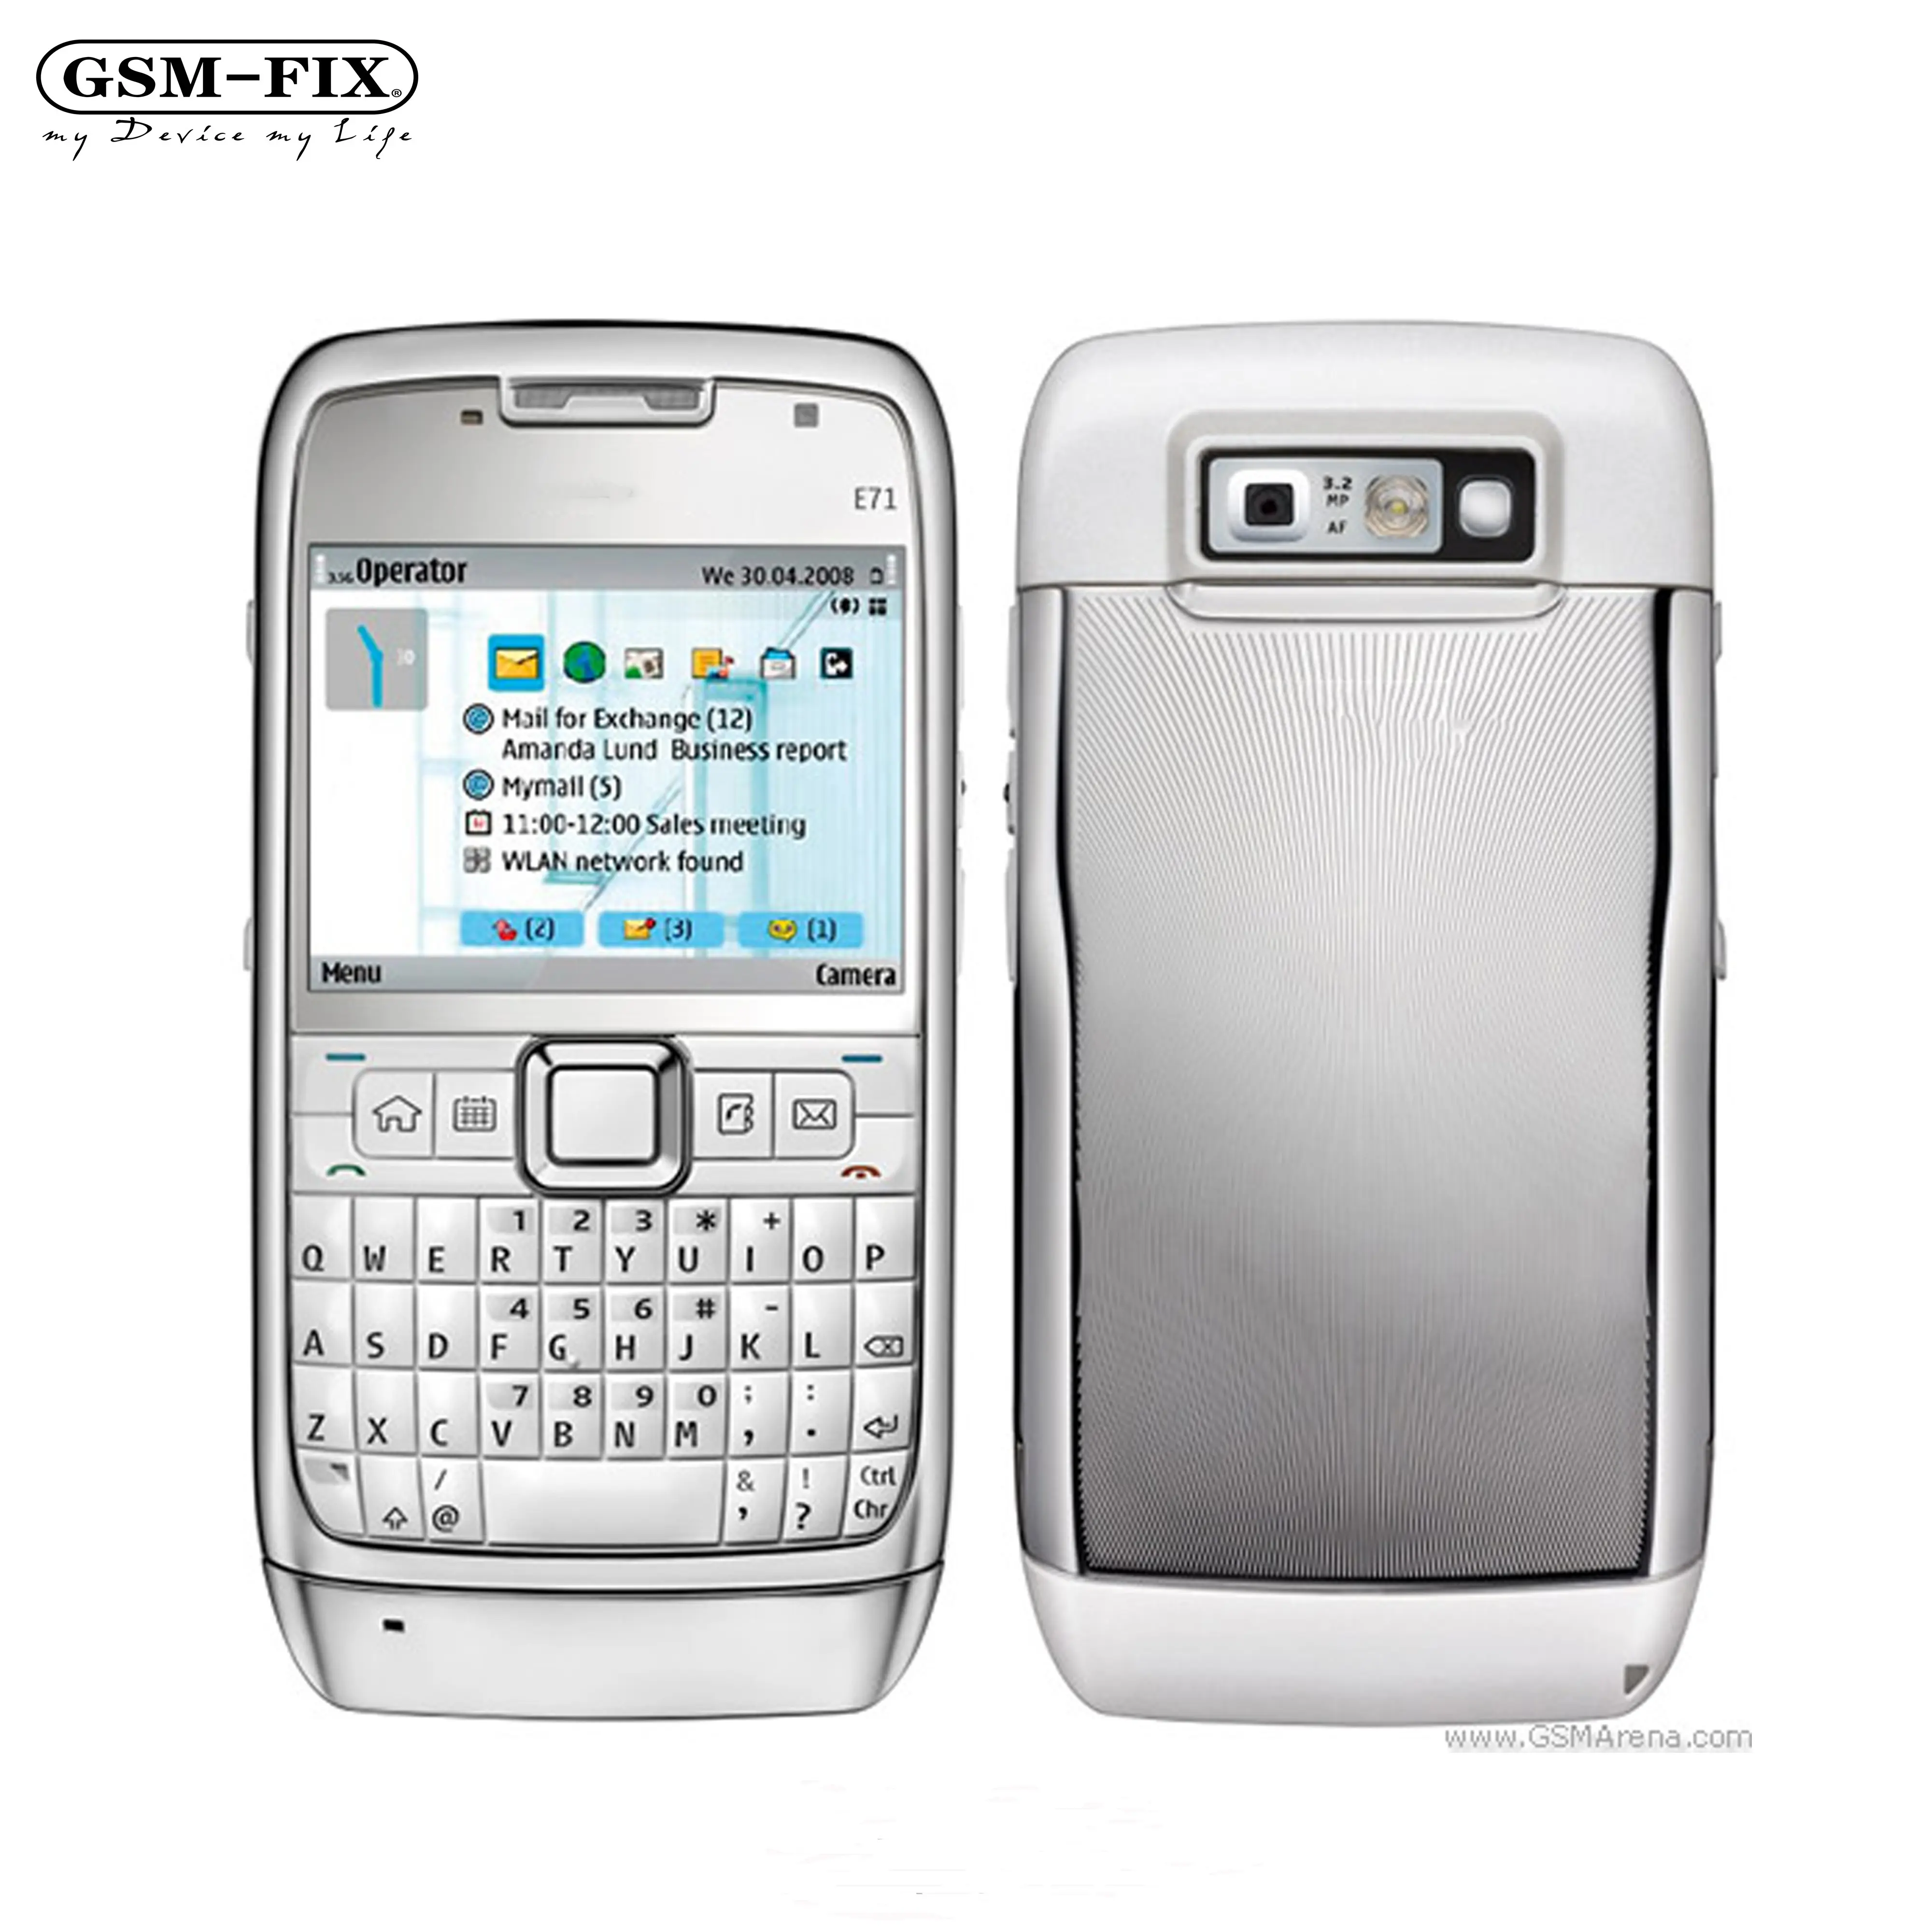 GSM-FIX 원래 E71 노키아 휴대 전화 3.2MP 3G 잠금 해제 노키아 E71 QWERTY 키보드 휴대 전화 기능 전화